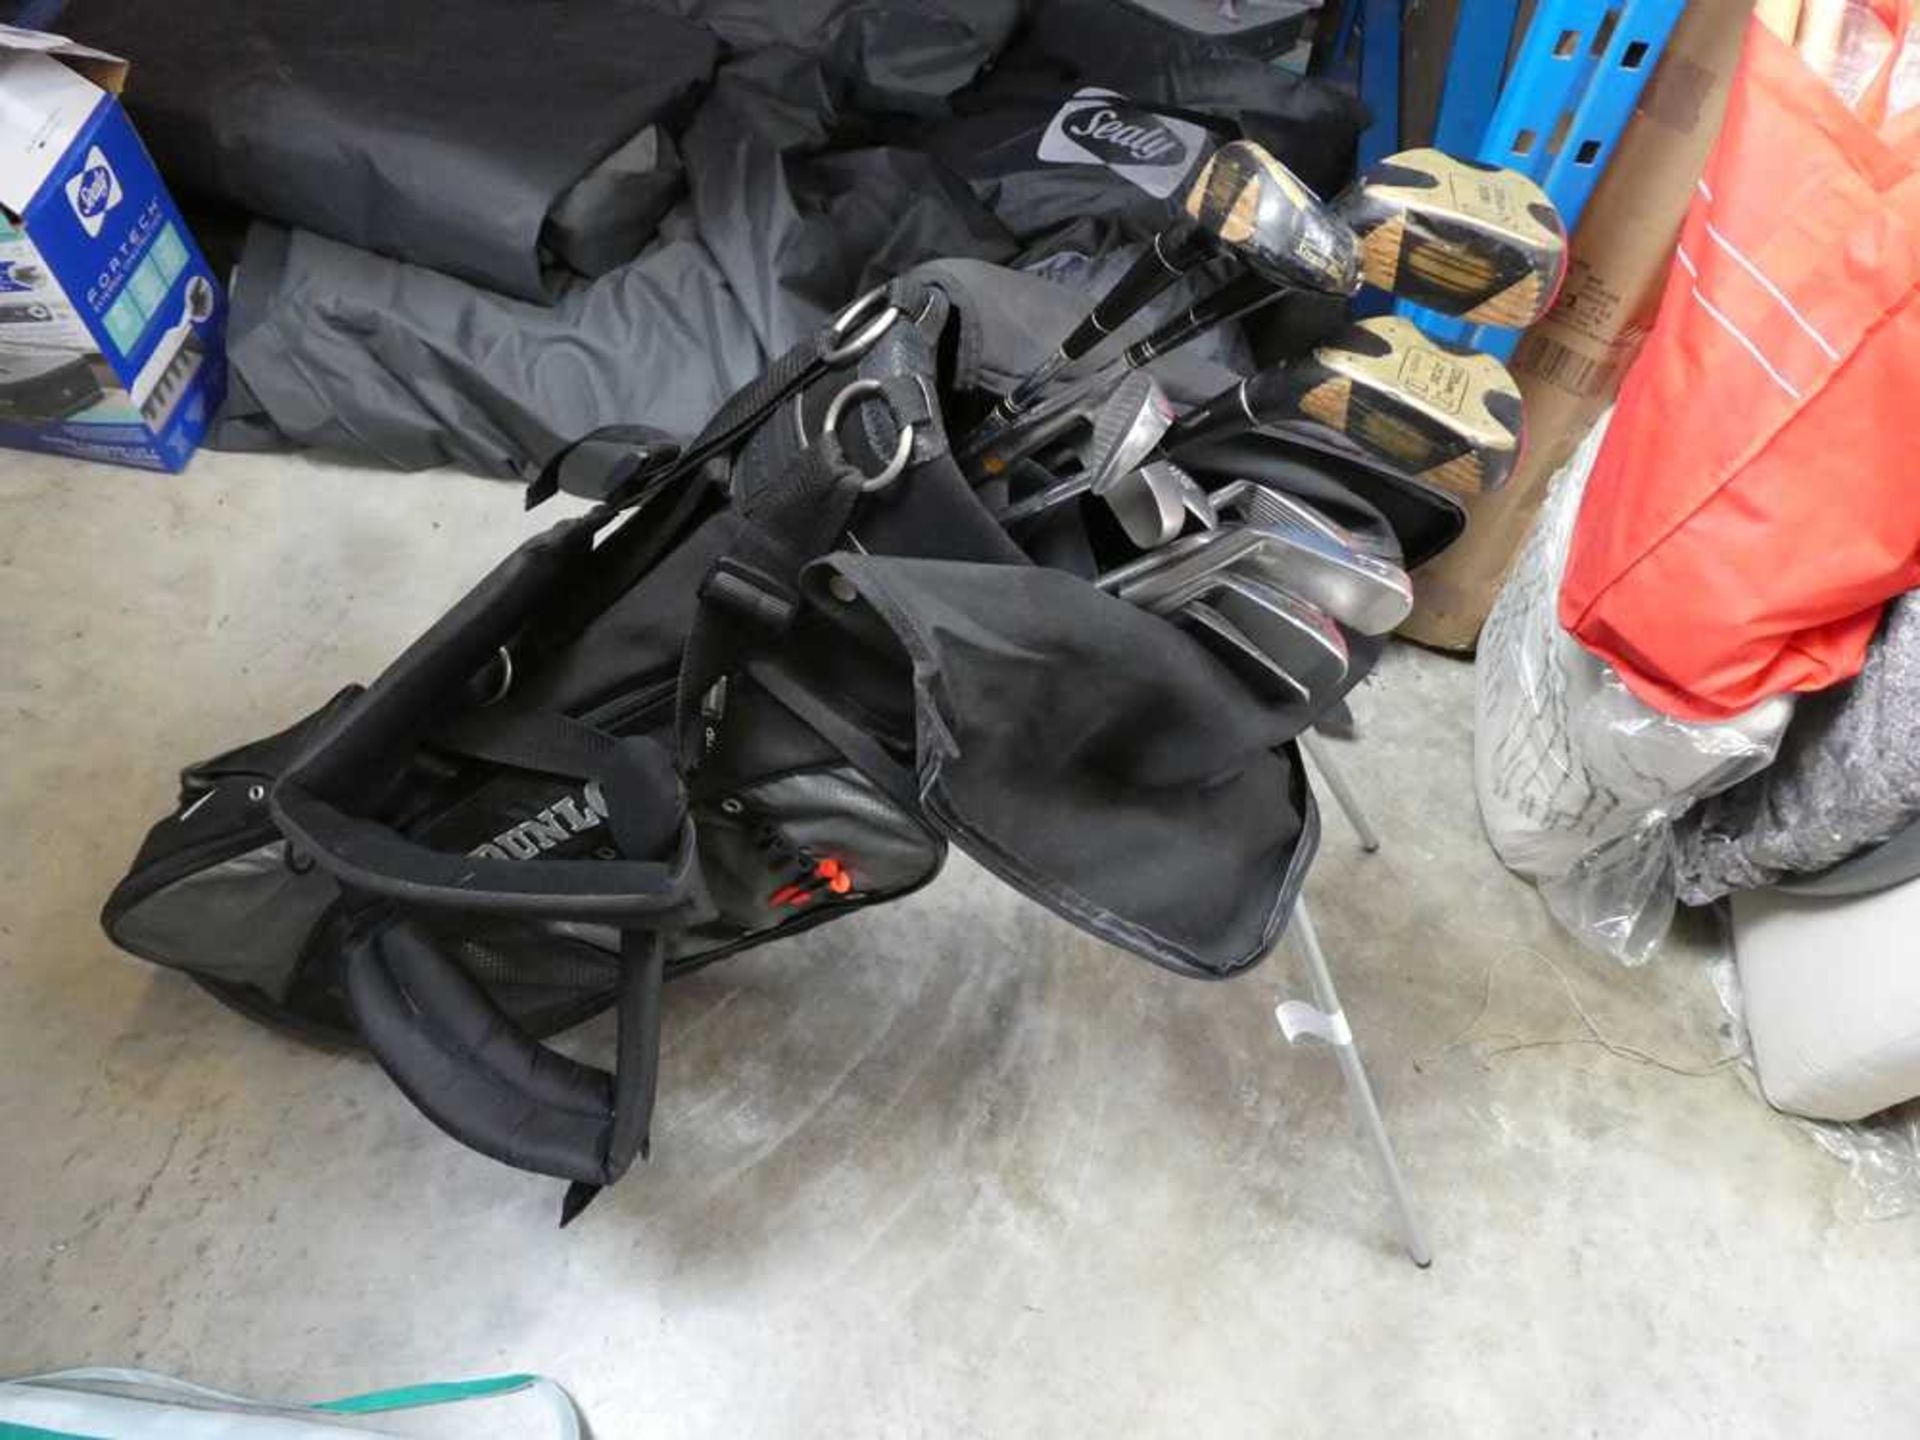 Dunlop golf bag containing mainly Wilson golf clubs, etc.